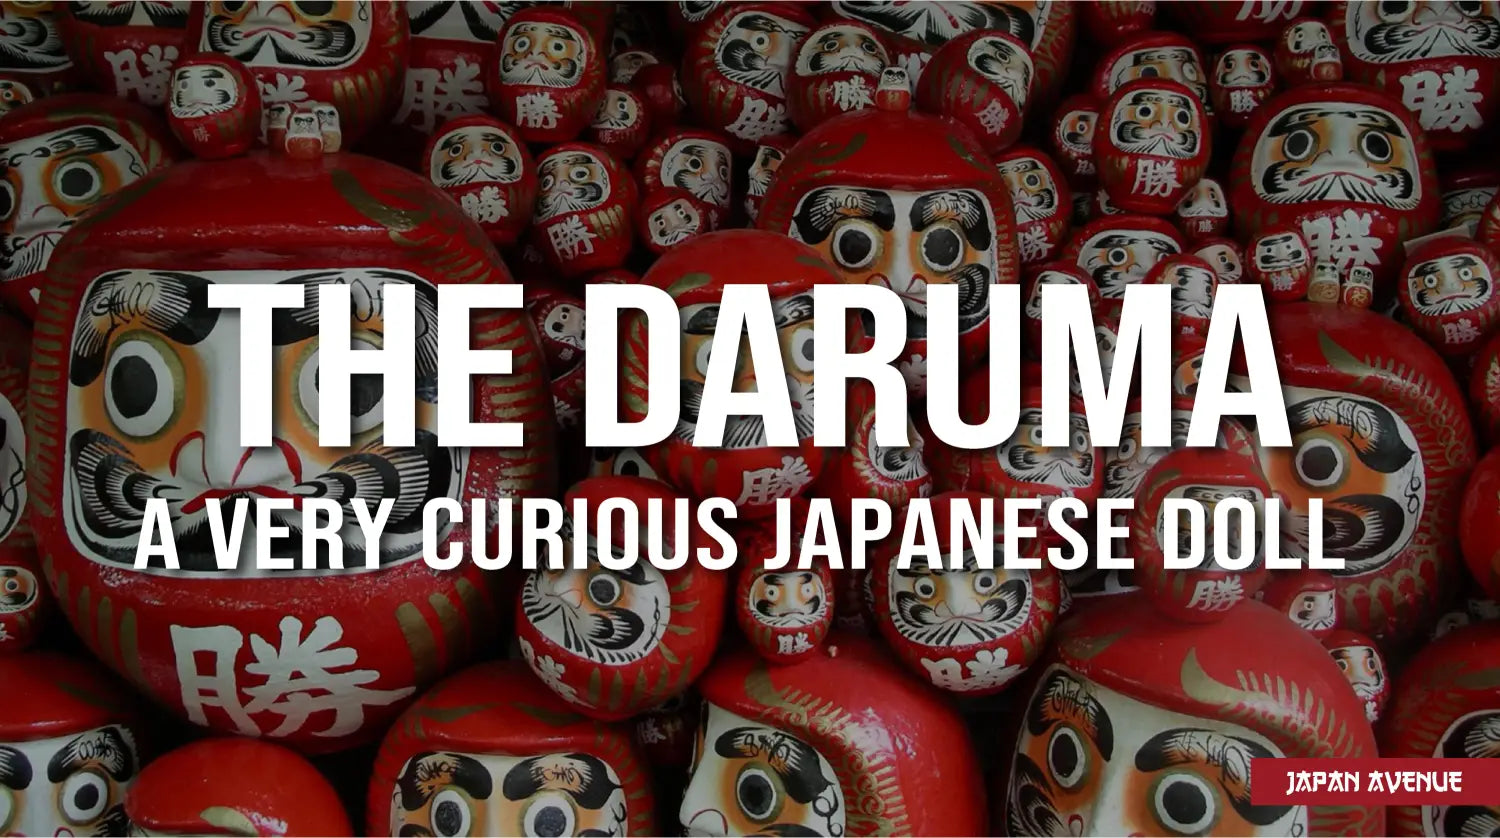 daruma meaning